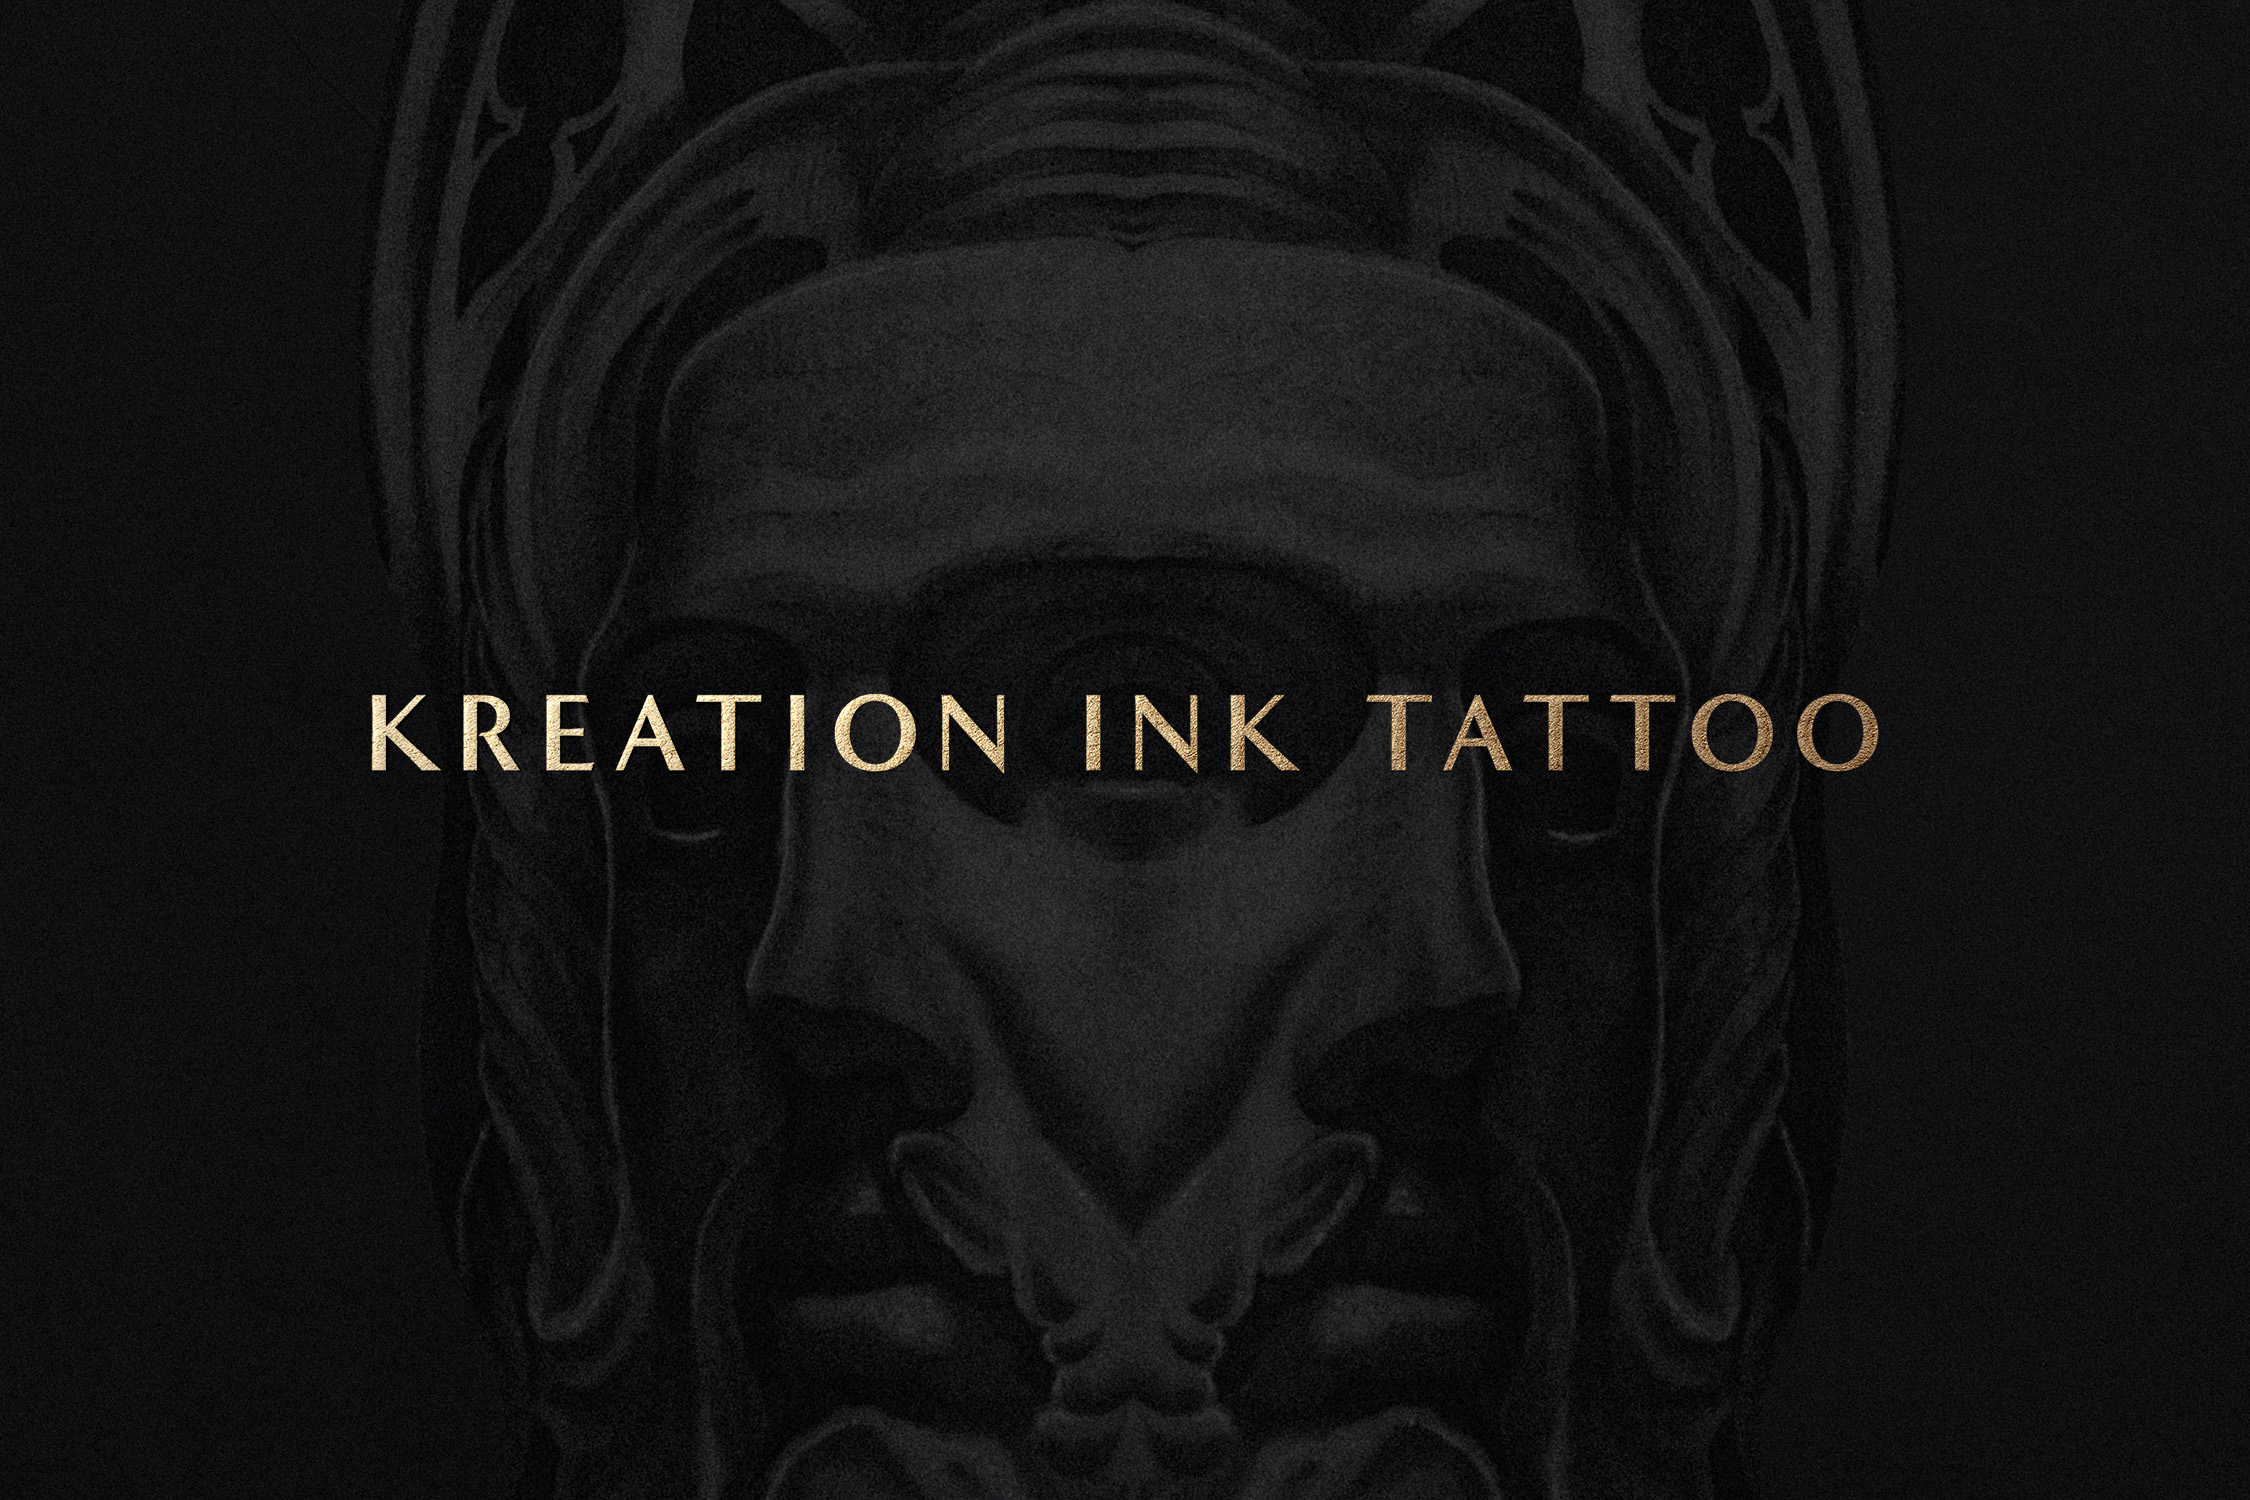 Kreation Ink Tattoo Identity Design by Kenneth Manuel